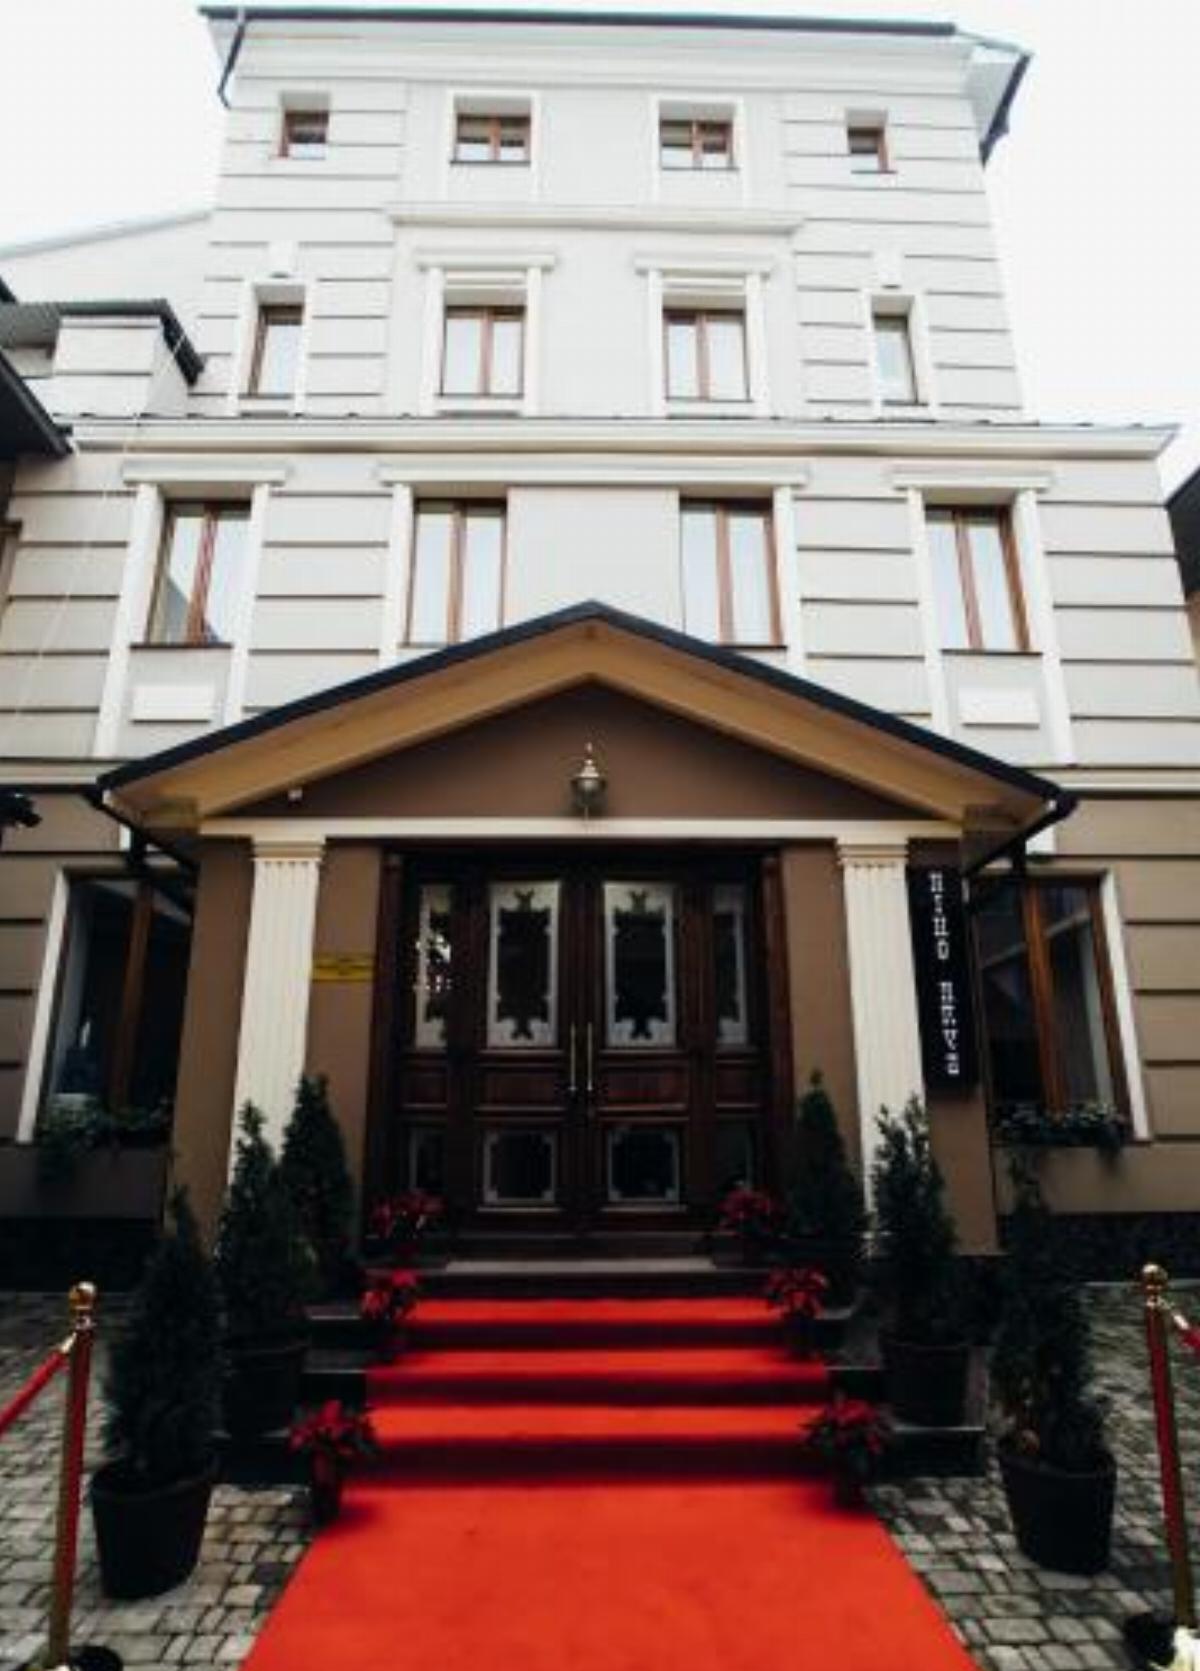 Central Magnat Cinema Hotel Chernivtsi Ukraine